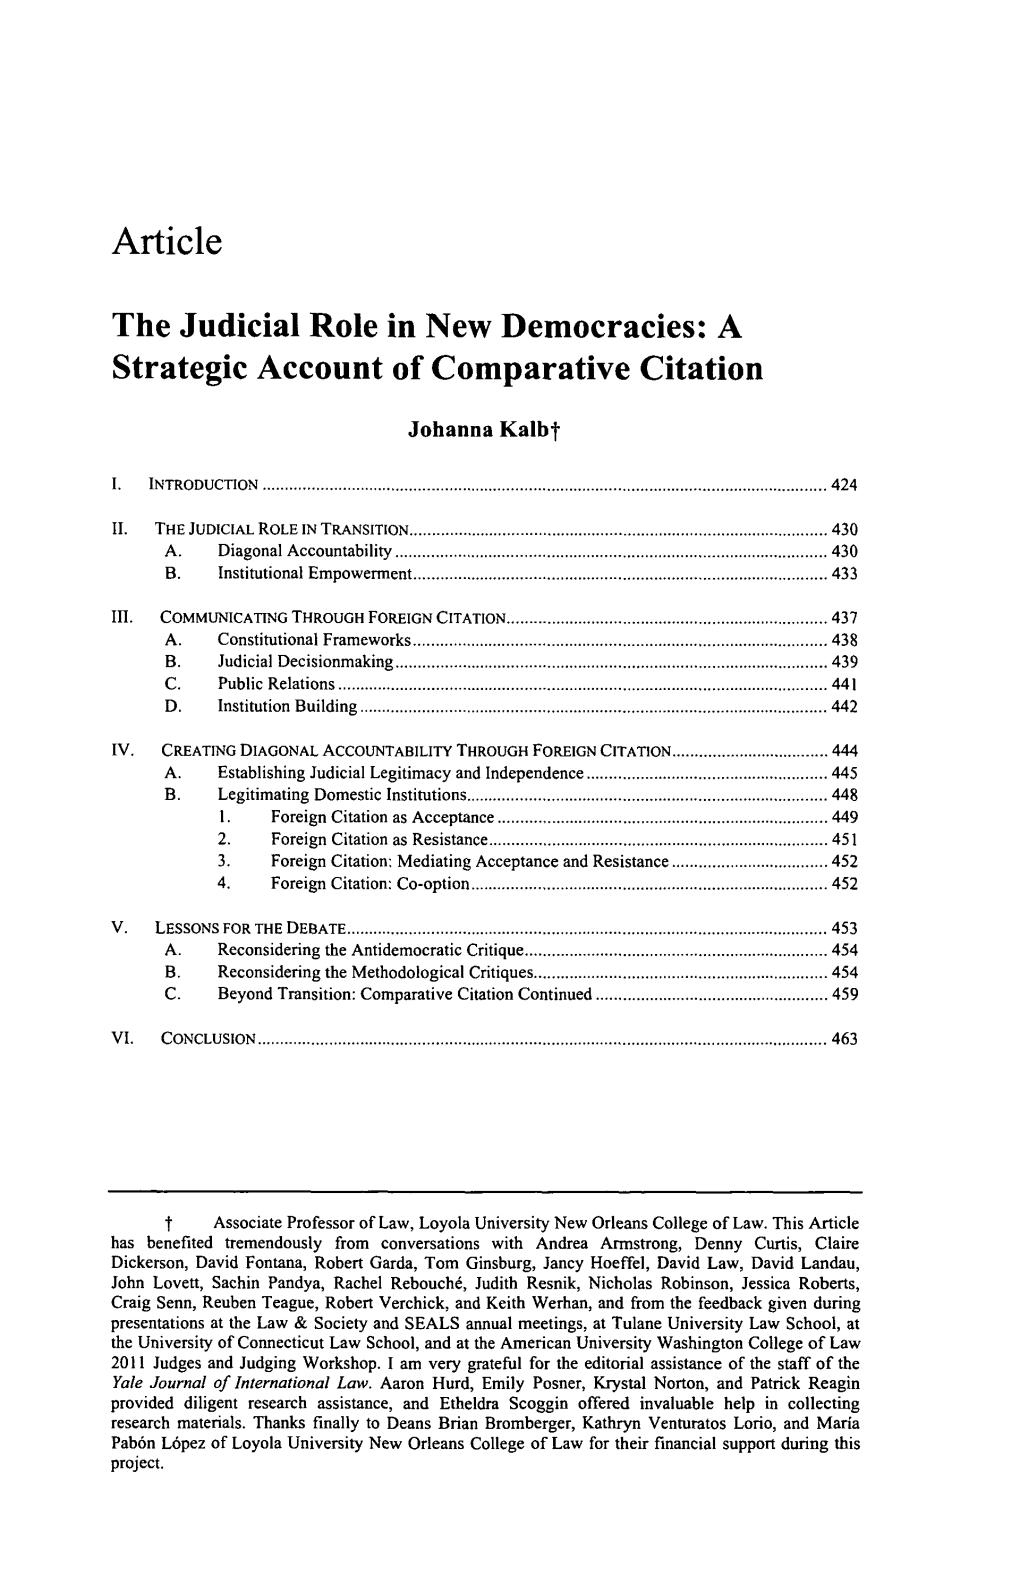 The Judicial Role in New Democracies: a Strategic Account of Comparative Citation